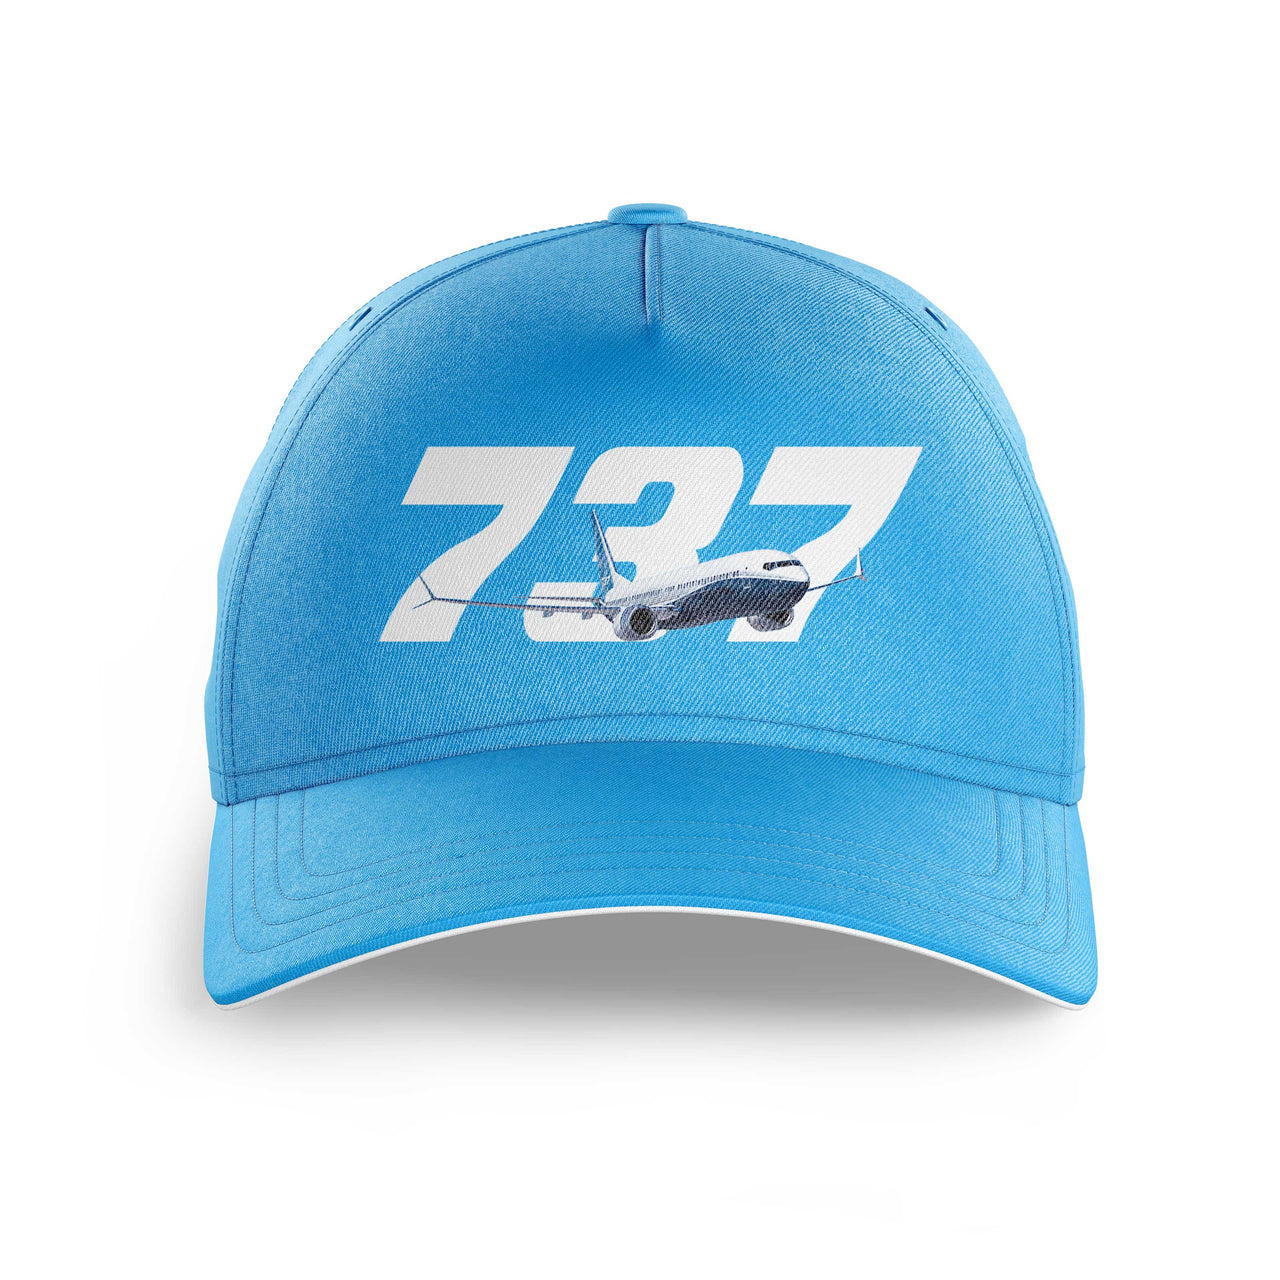 Super Boeing 737 Printed Hats